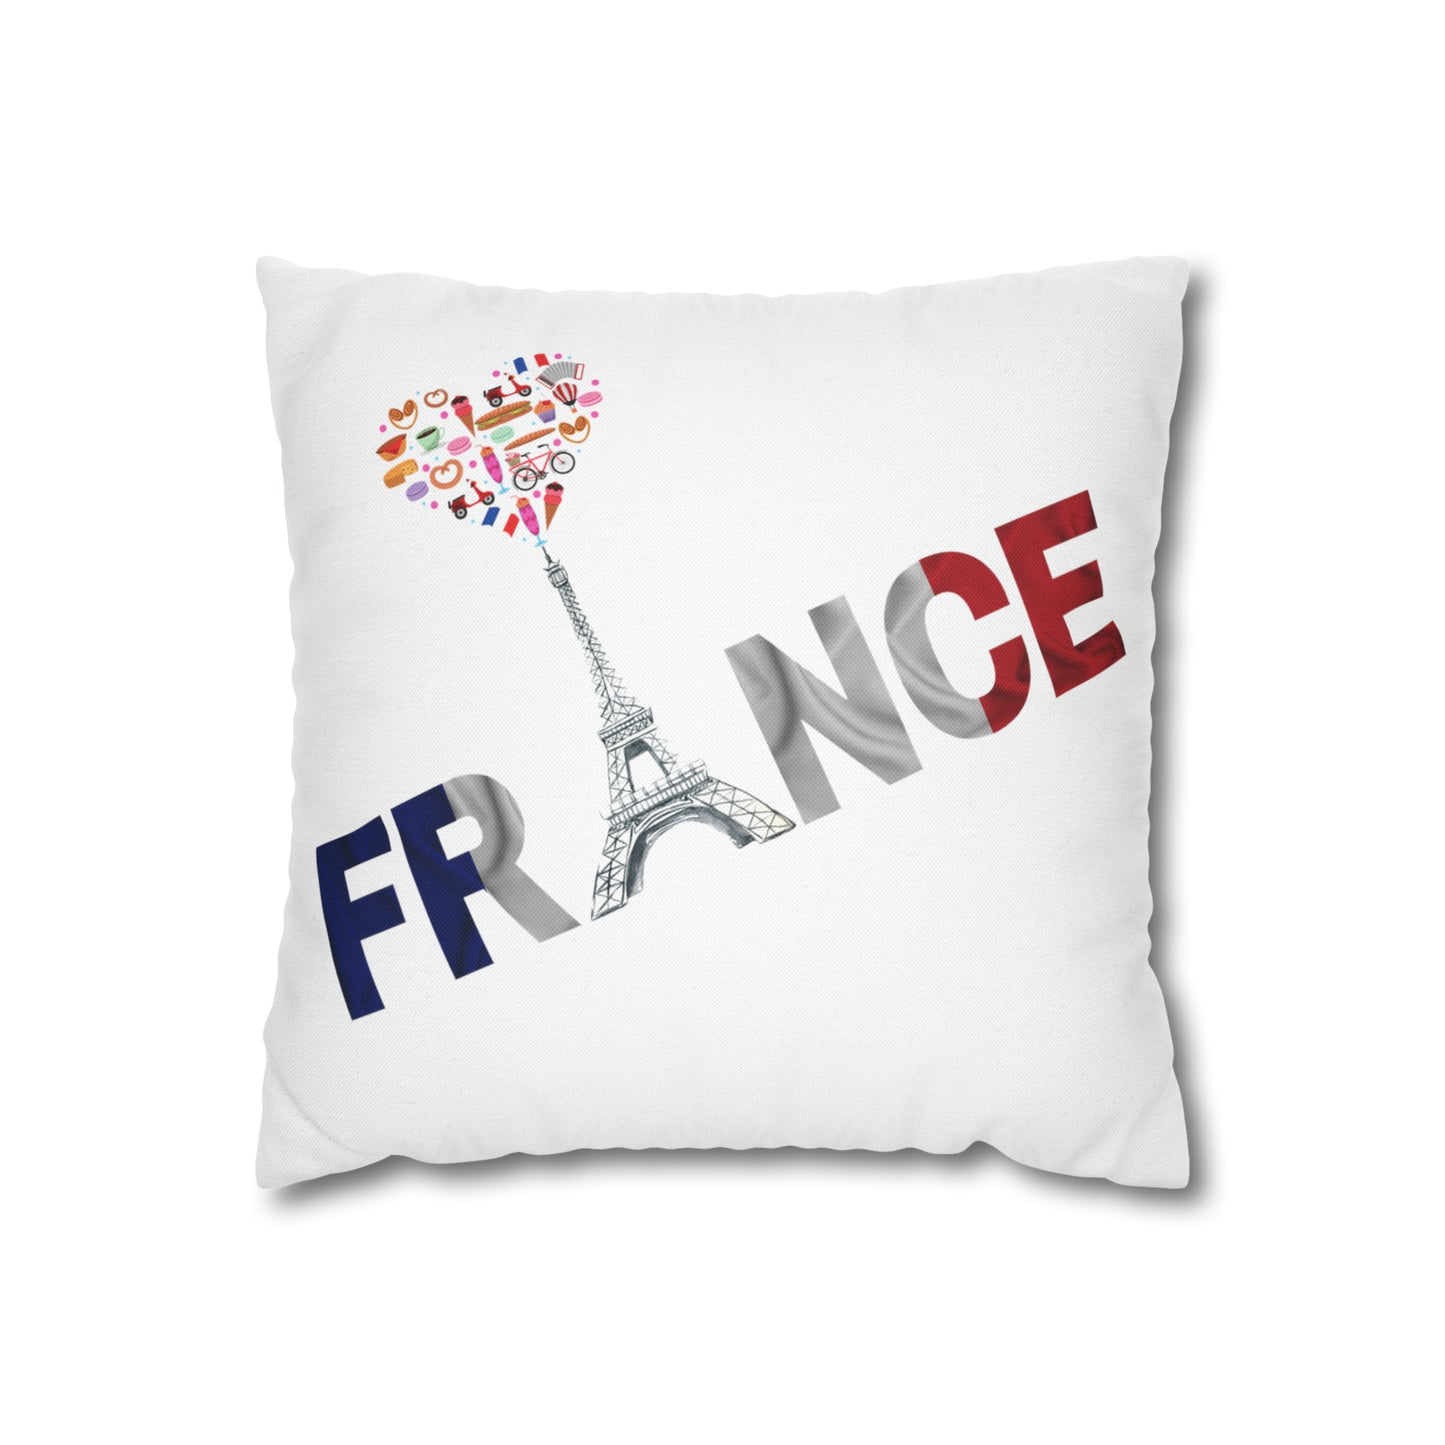 France Eiffel Tower Spun Polyester Square Pillow Case